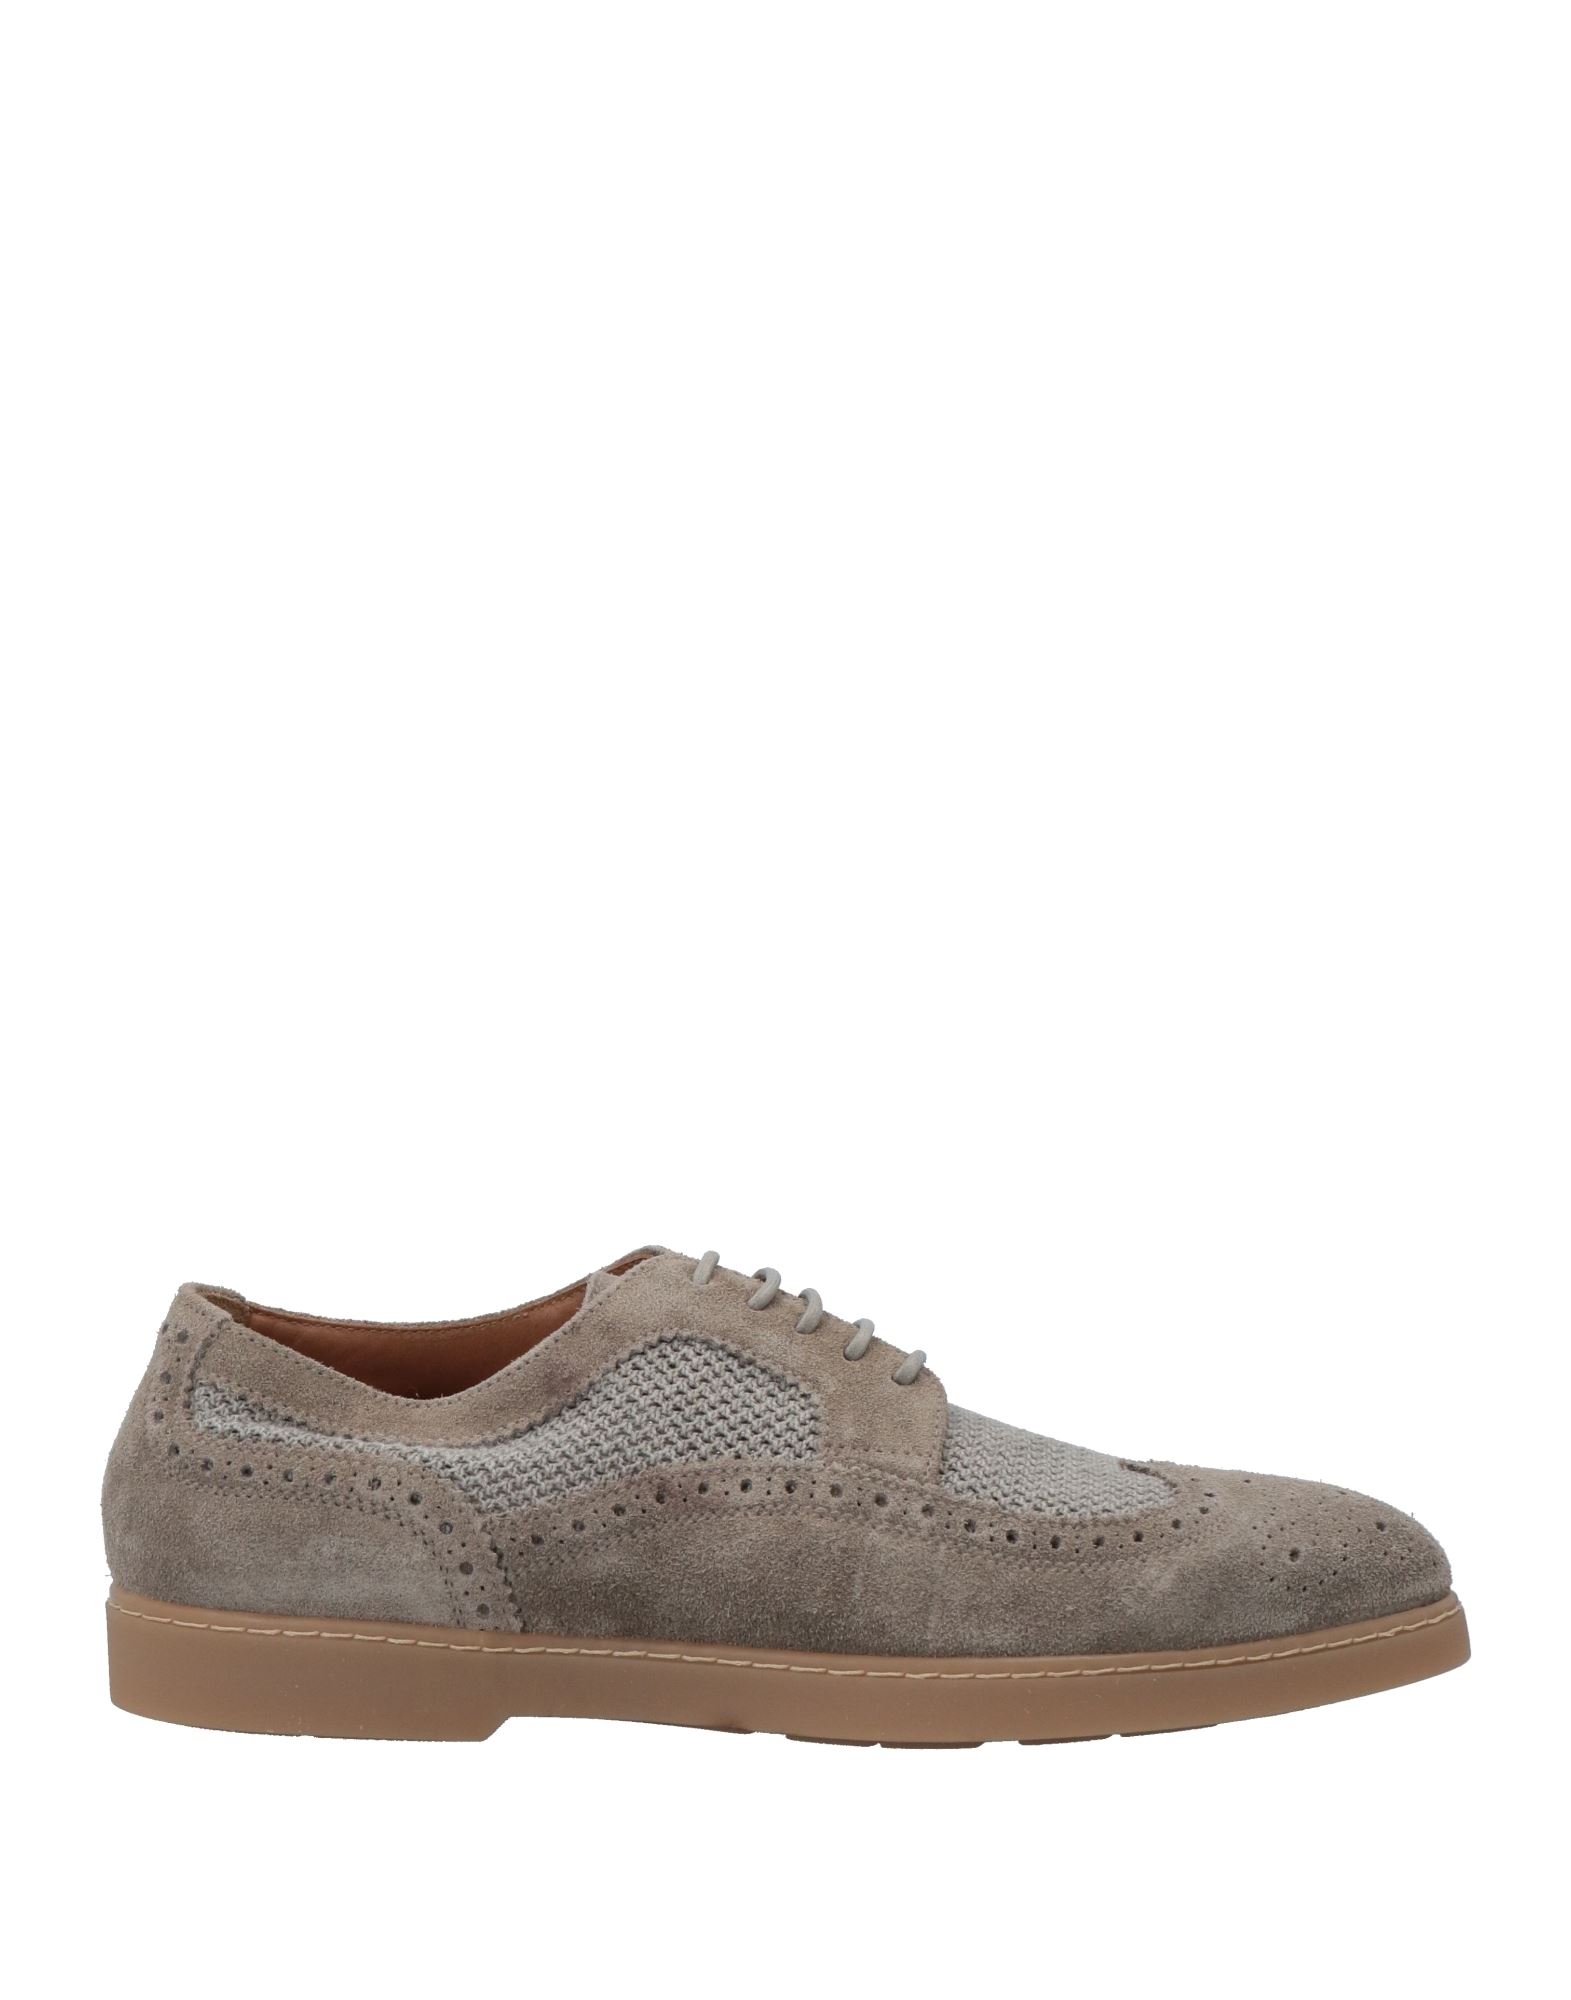 Doucal's Man Lace-up Shoes Grey Size 7 Soft Leather, Textile Fibers